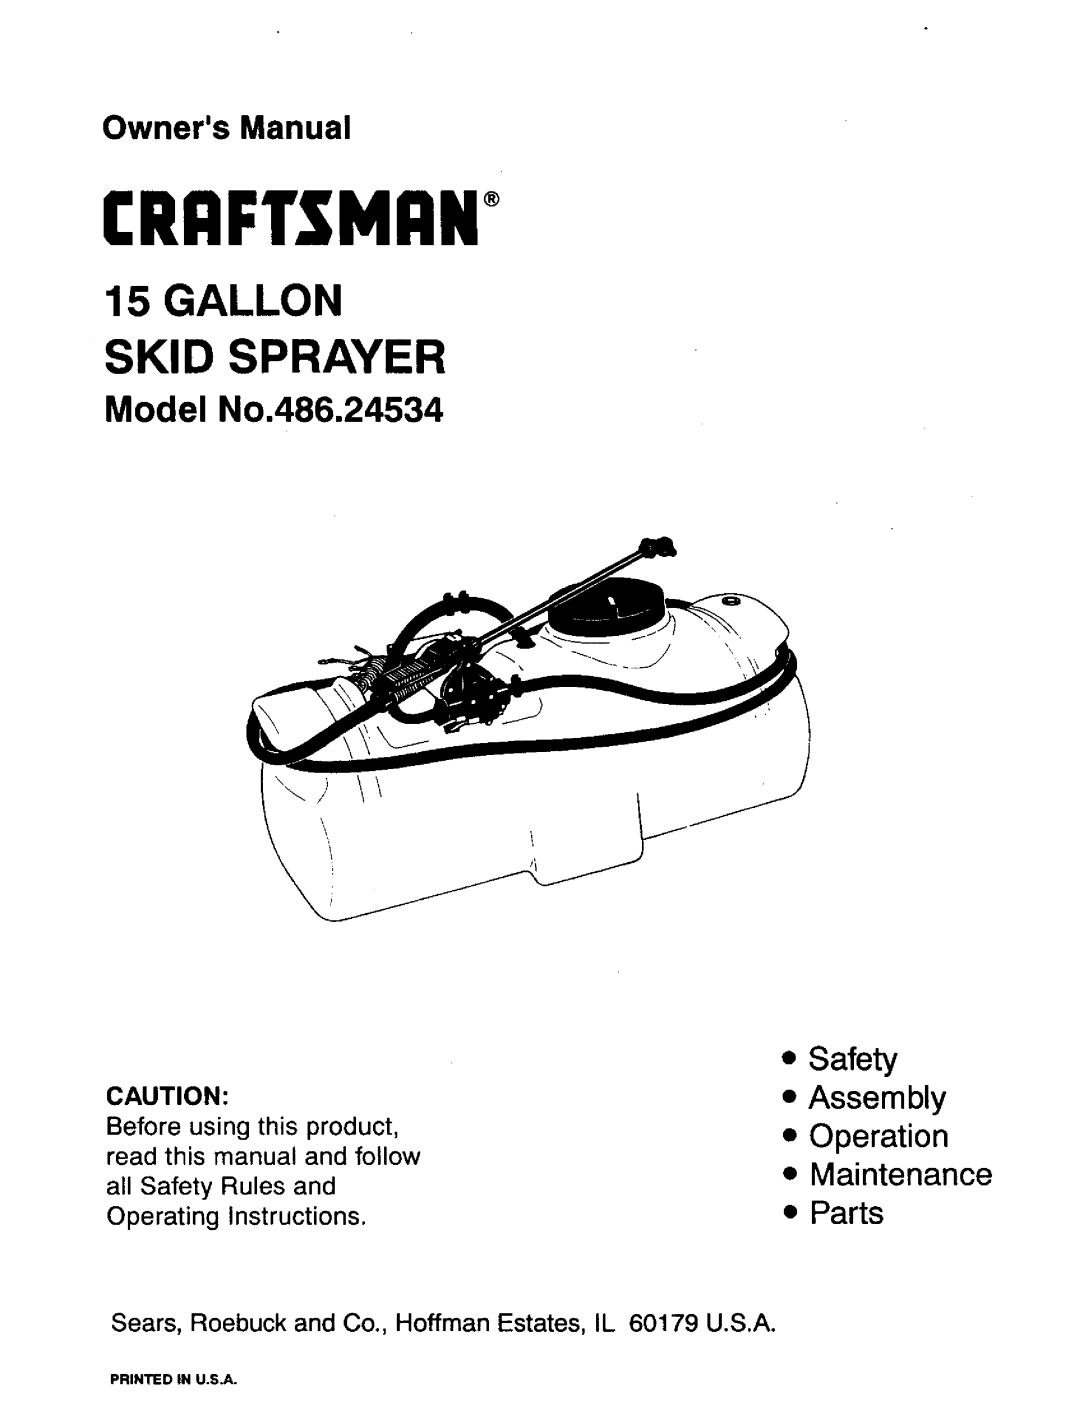 Craftsman 486.24534 owner manual Model No,486,24534, Safety Assembly Operation Maintenance, Raftsman, Skid Sprayer, Gallon 